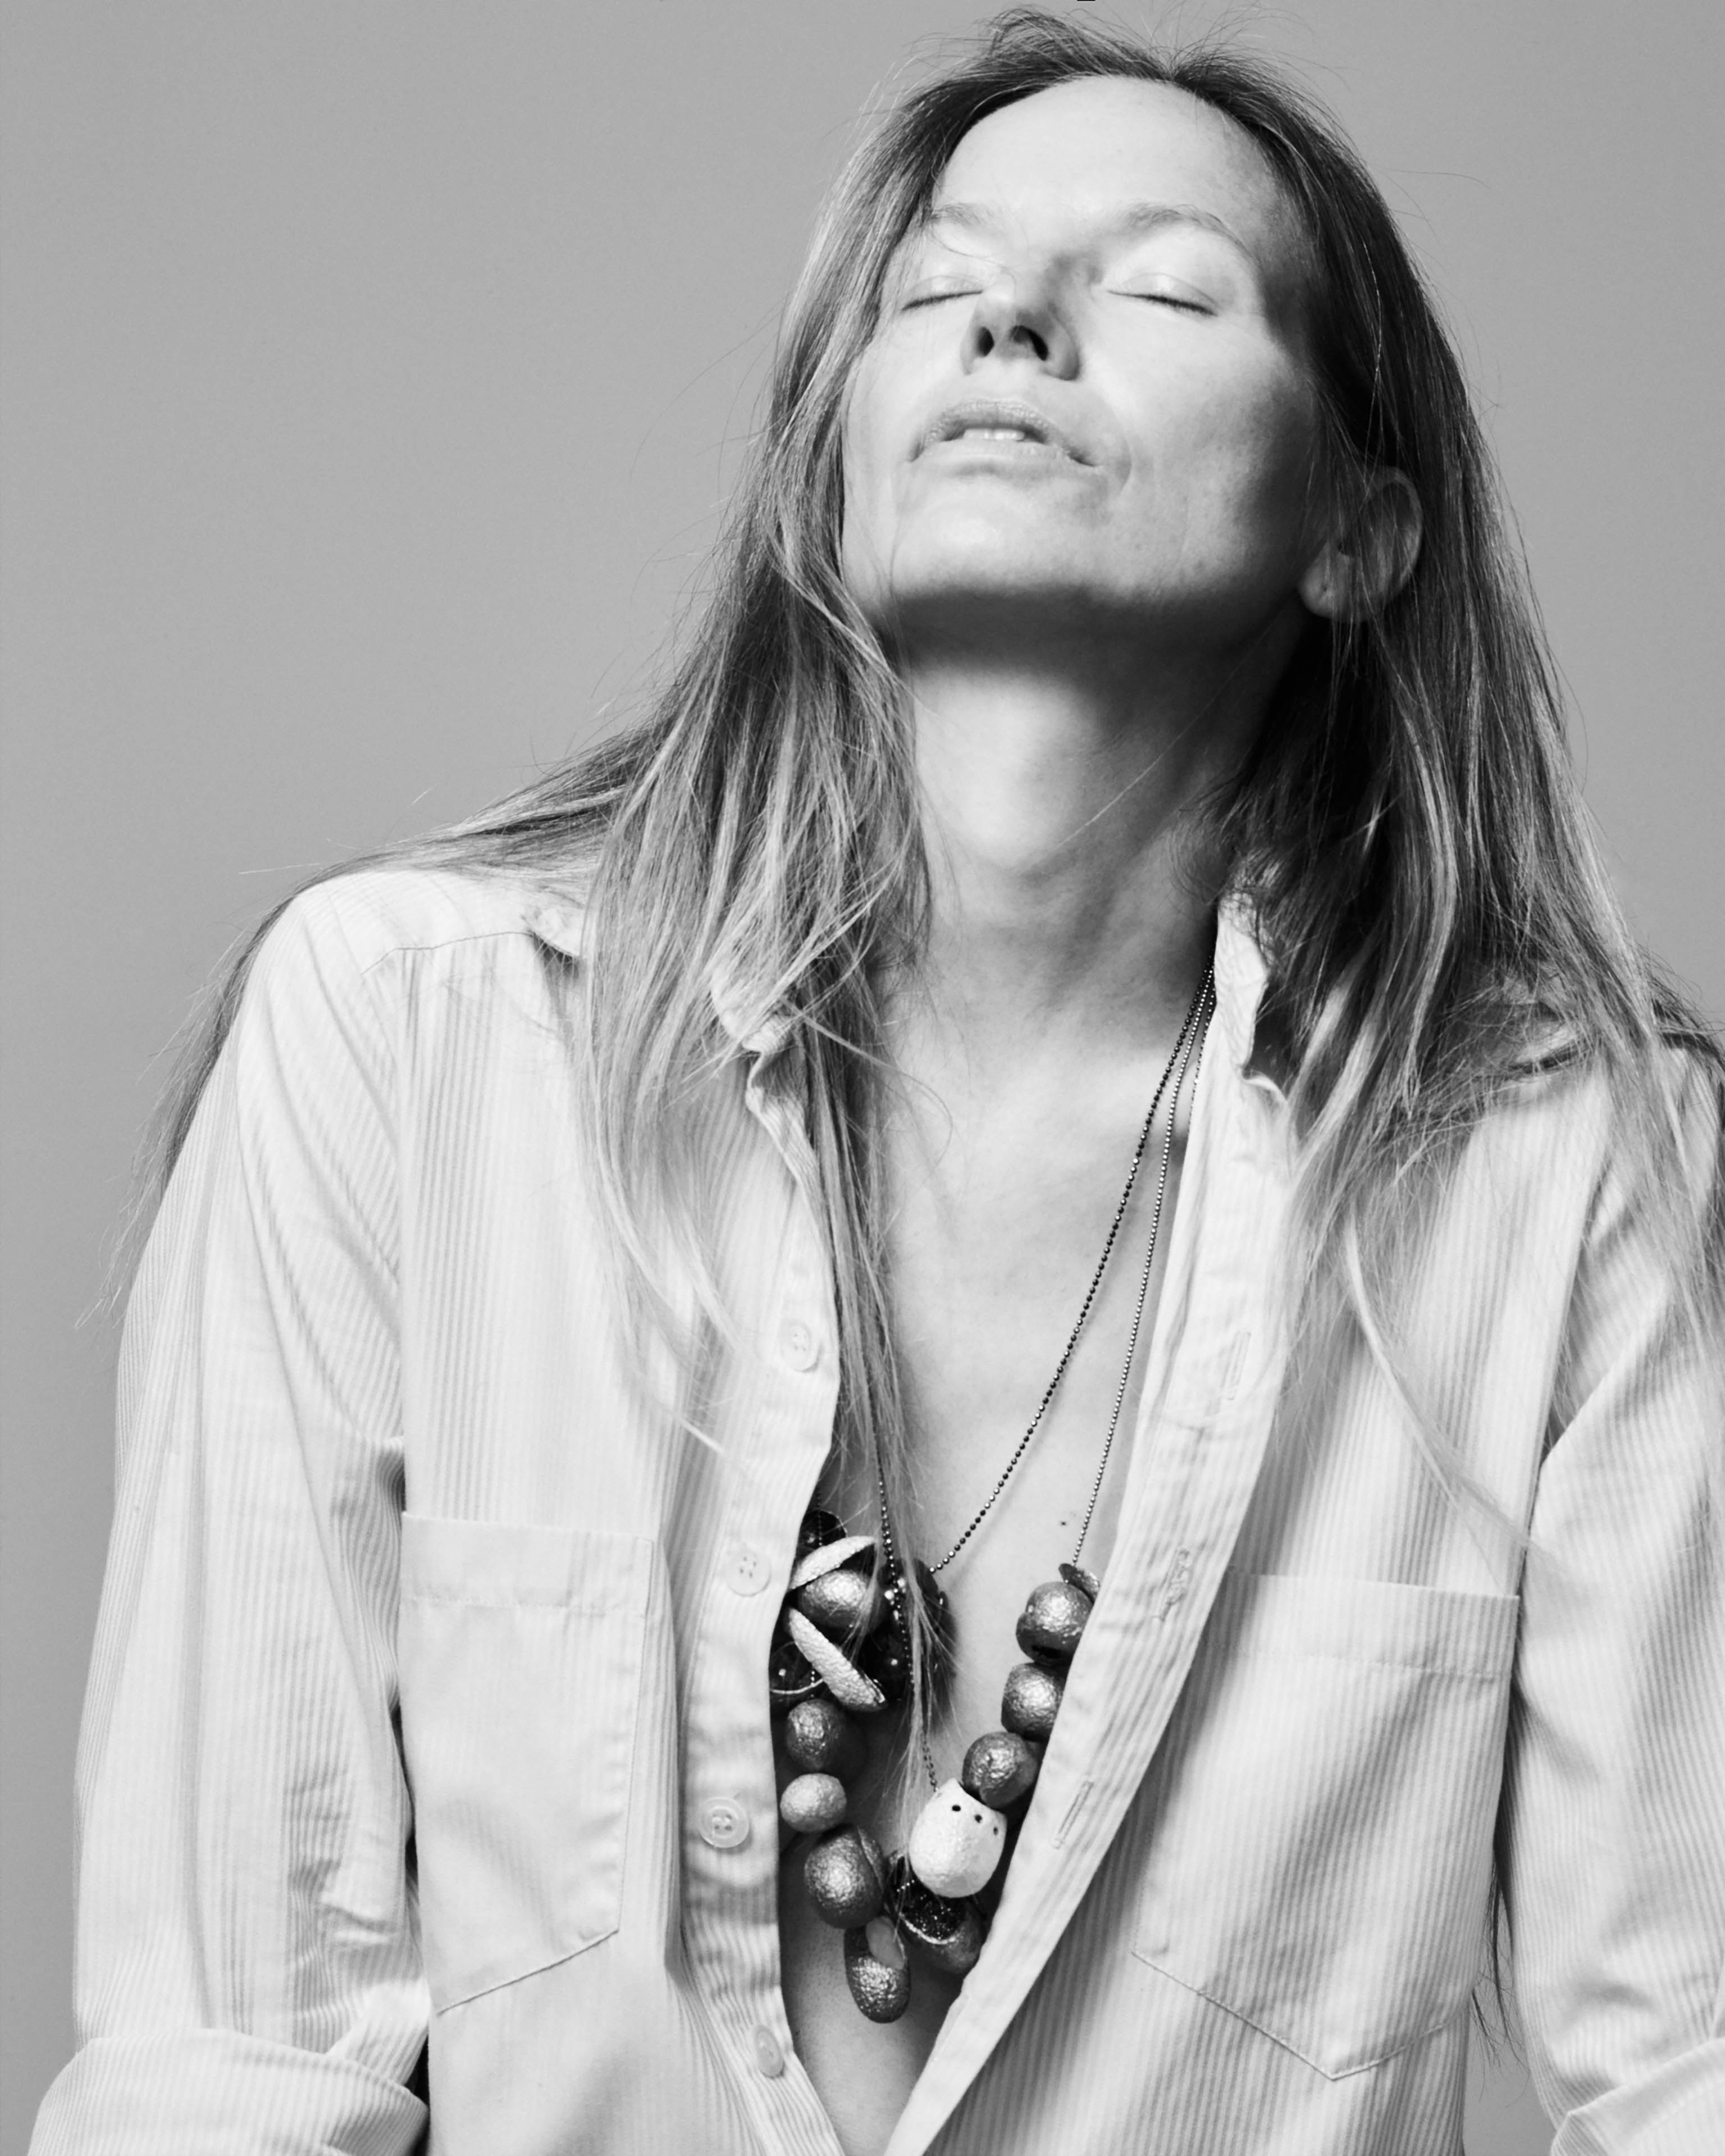 Artist Michaela Schwarz-Weismann is wearing silk cocoon necklaces, a light shirt, her eyes are closed